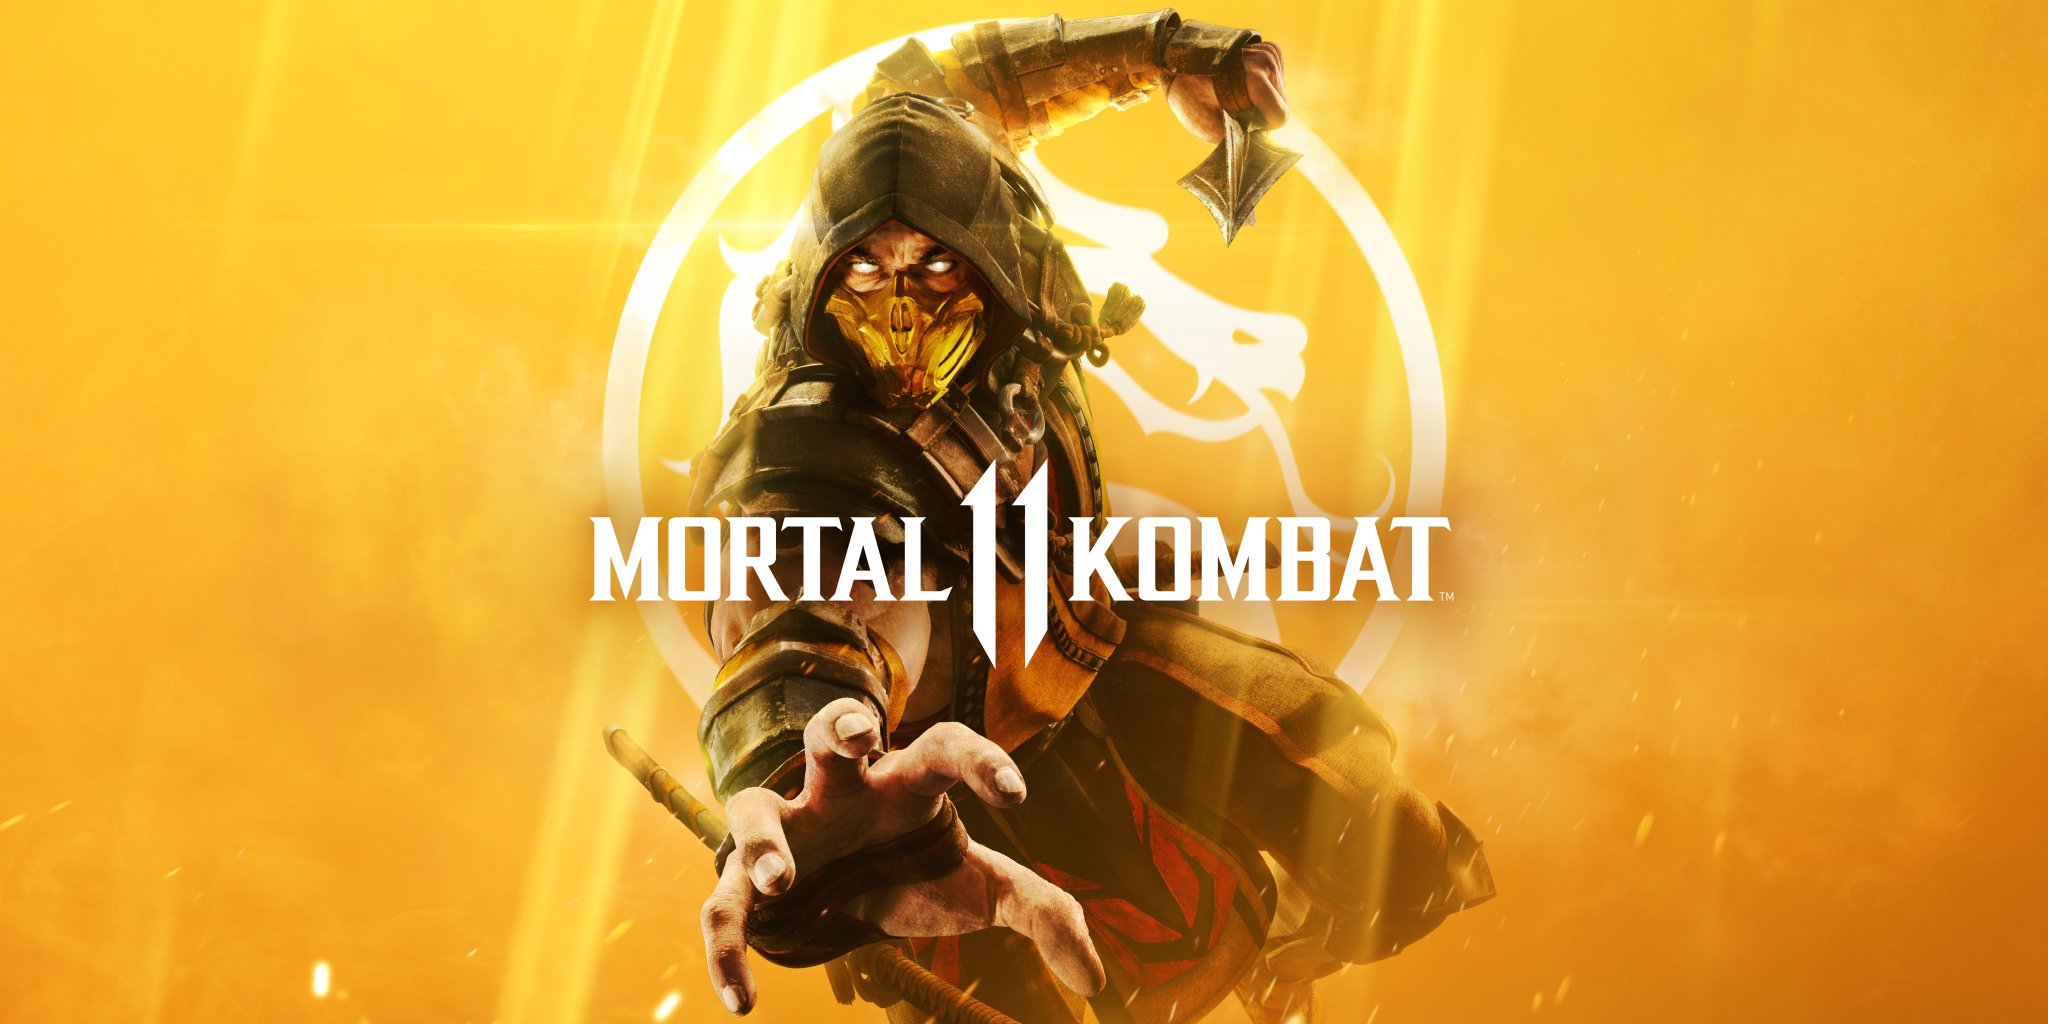 mortal kombat 11 free download for mac